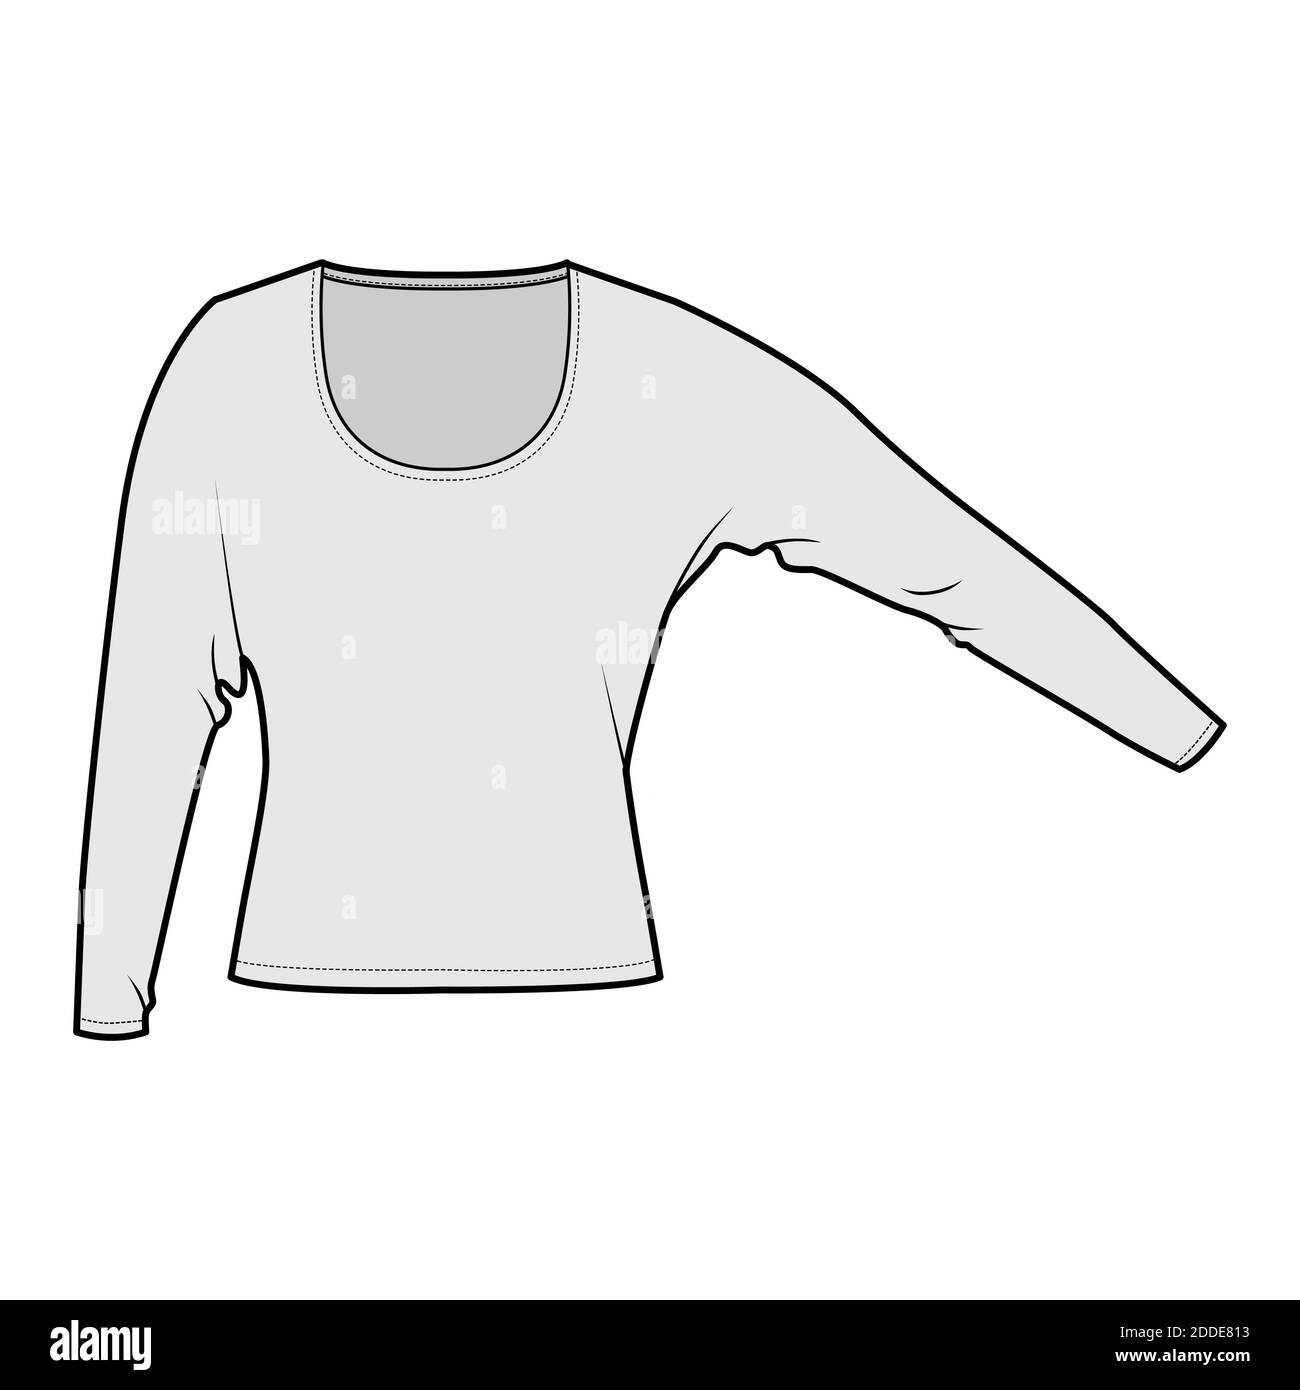 Dolman Sleeve Shirt (Unisex)